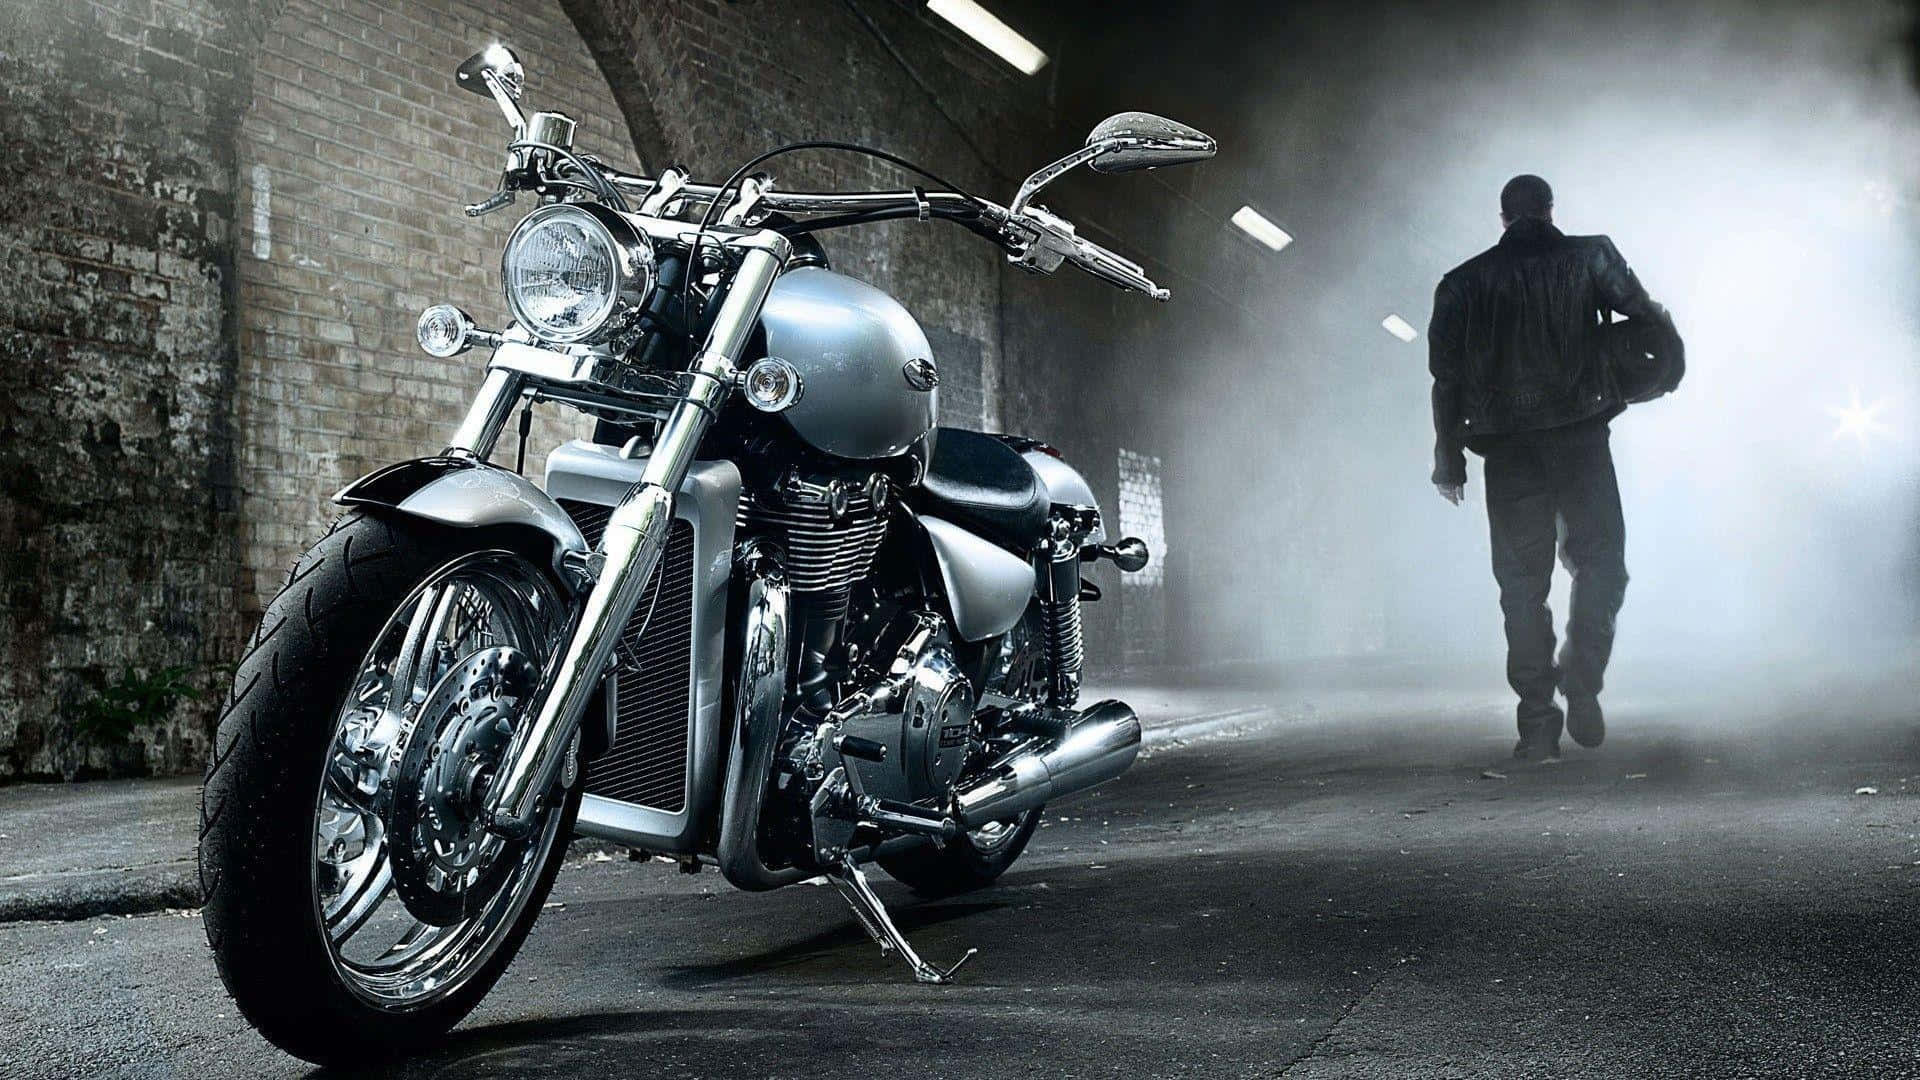 Lookin' sharp aboard this classic Harley Davidson HD Wallpaper